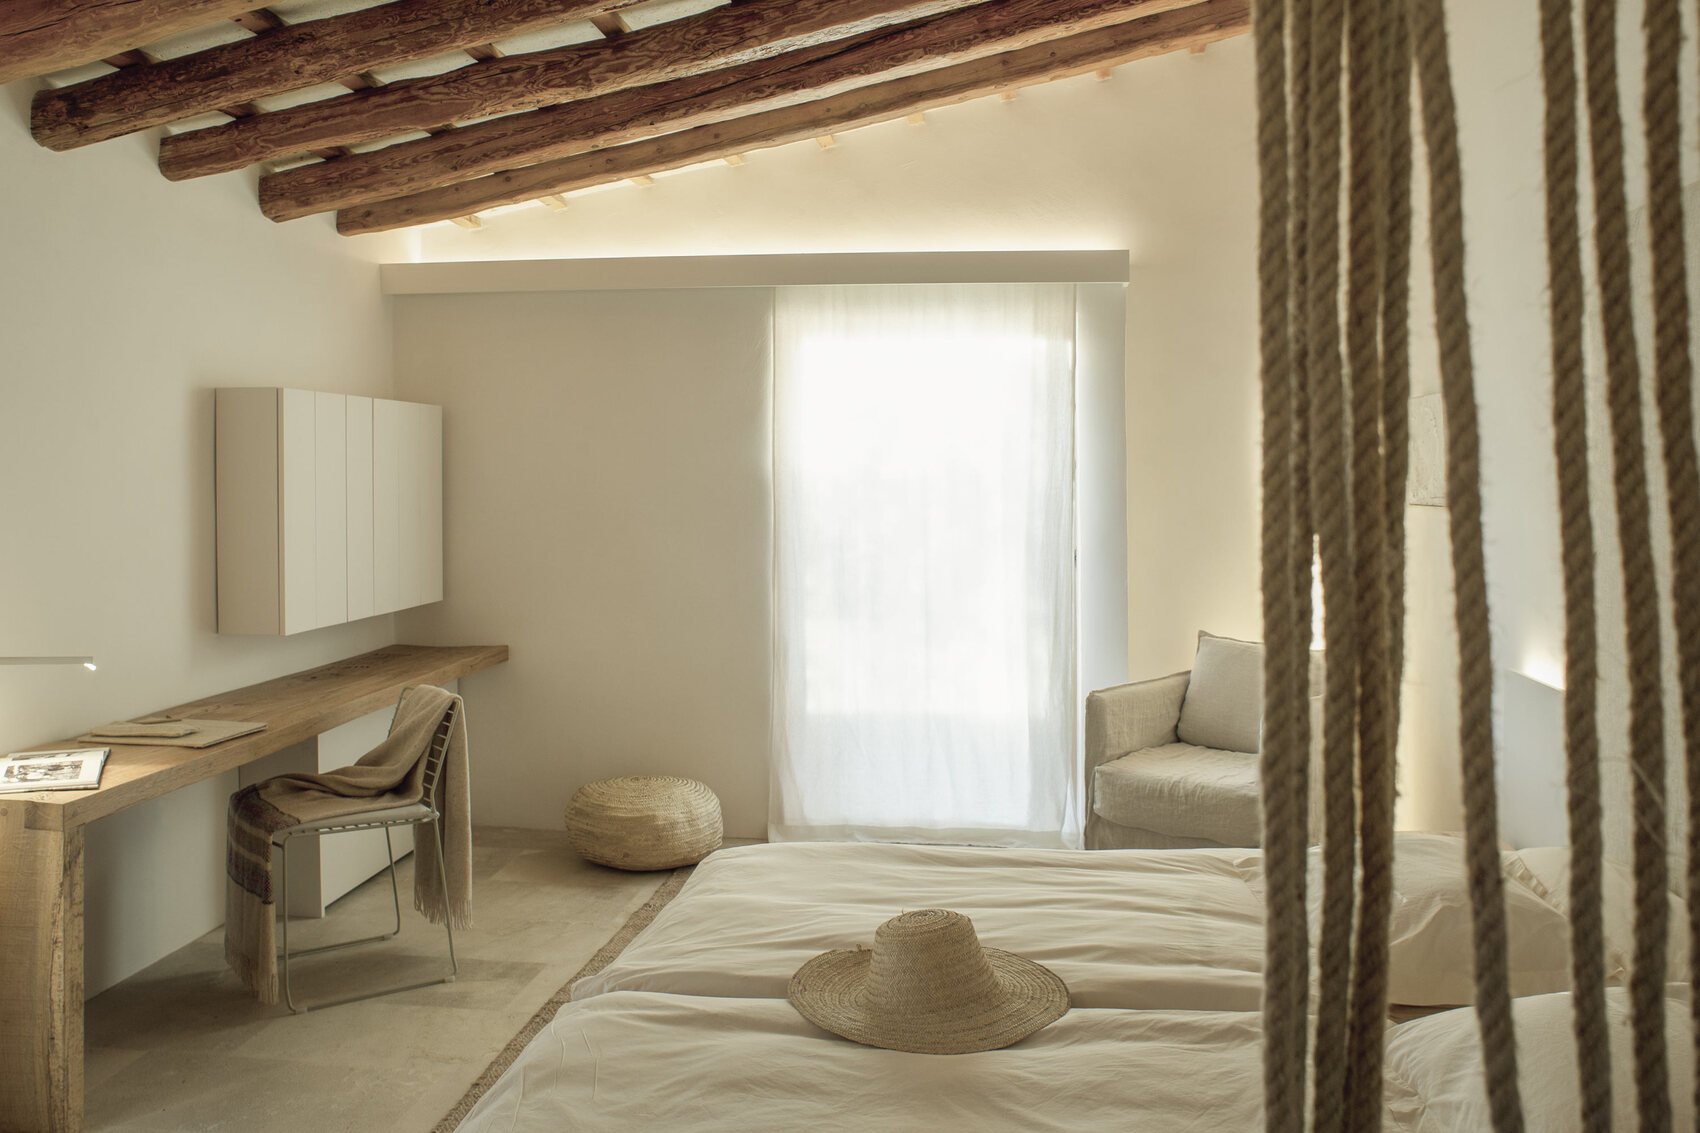 Best luxury eco boutique hotel with pool, spa, restaurant 5* Mallorca Spain - Es Raco d'Arta - room suite